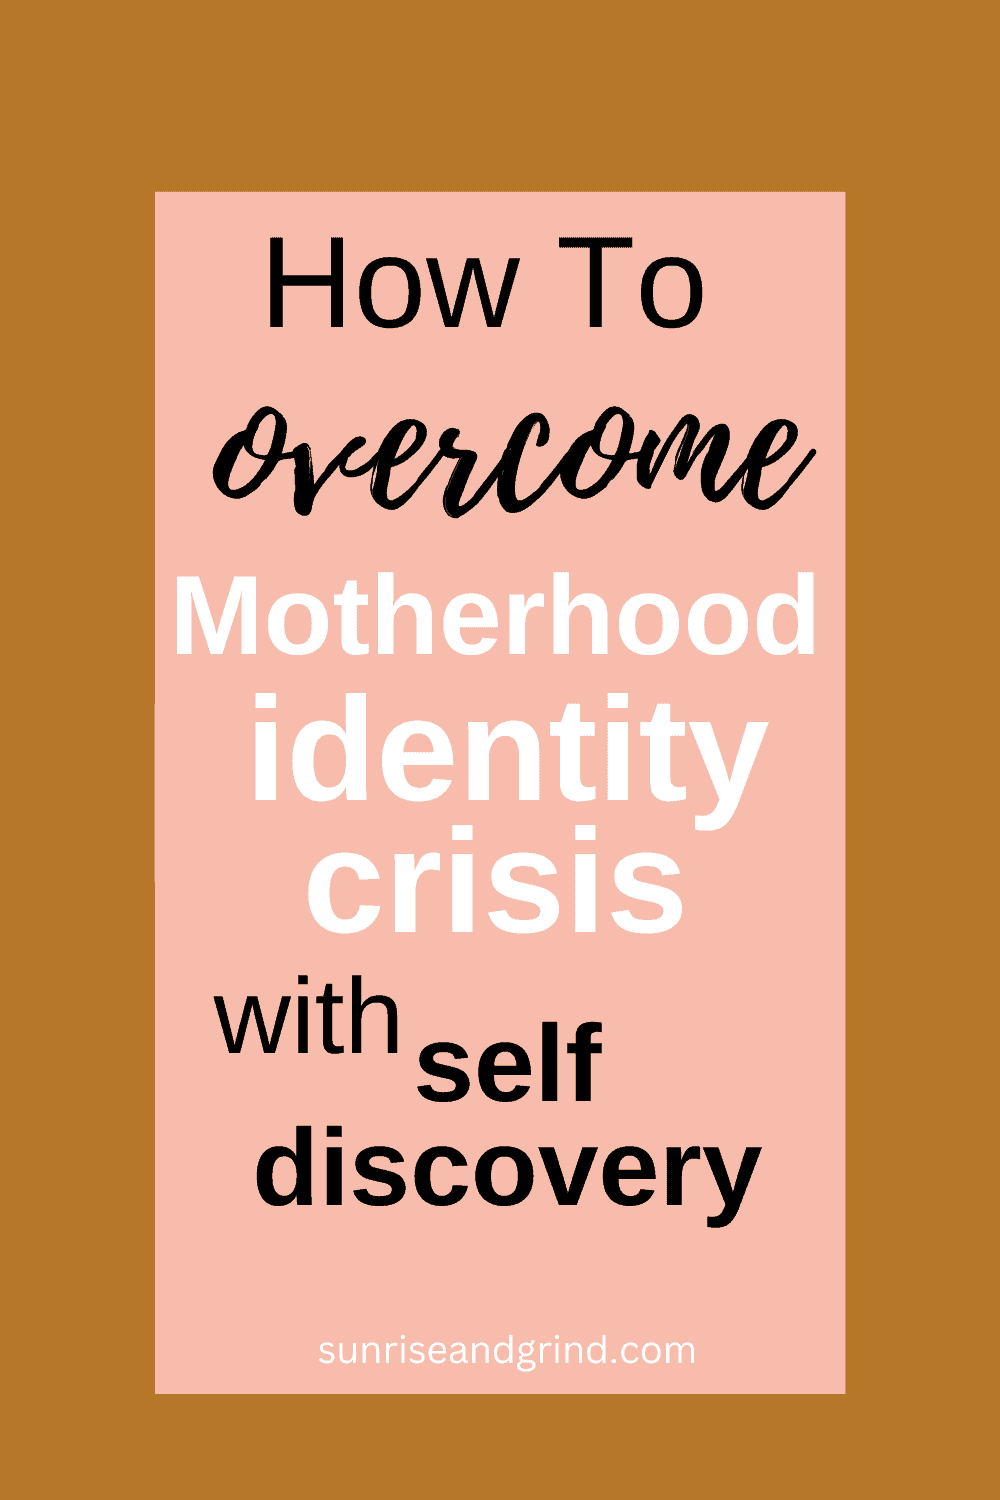 Motherhood-identity-crisis-title